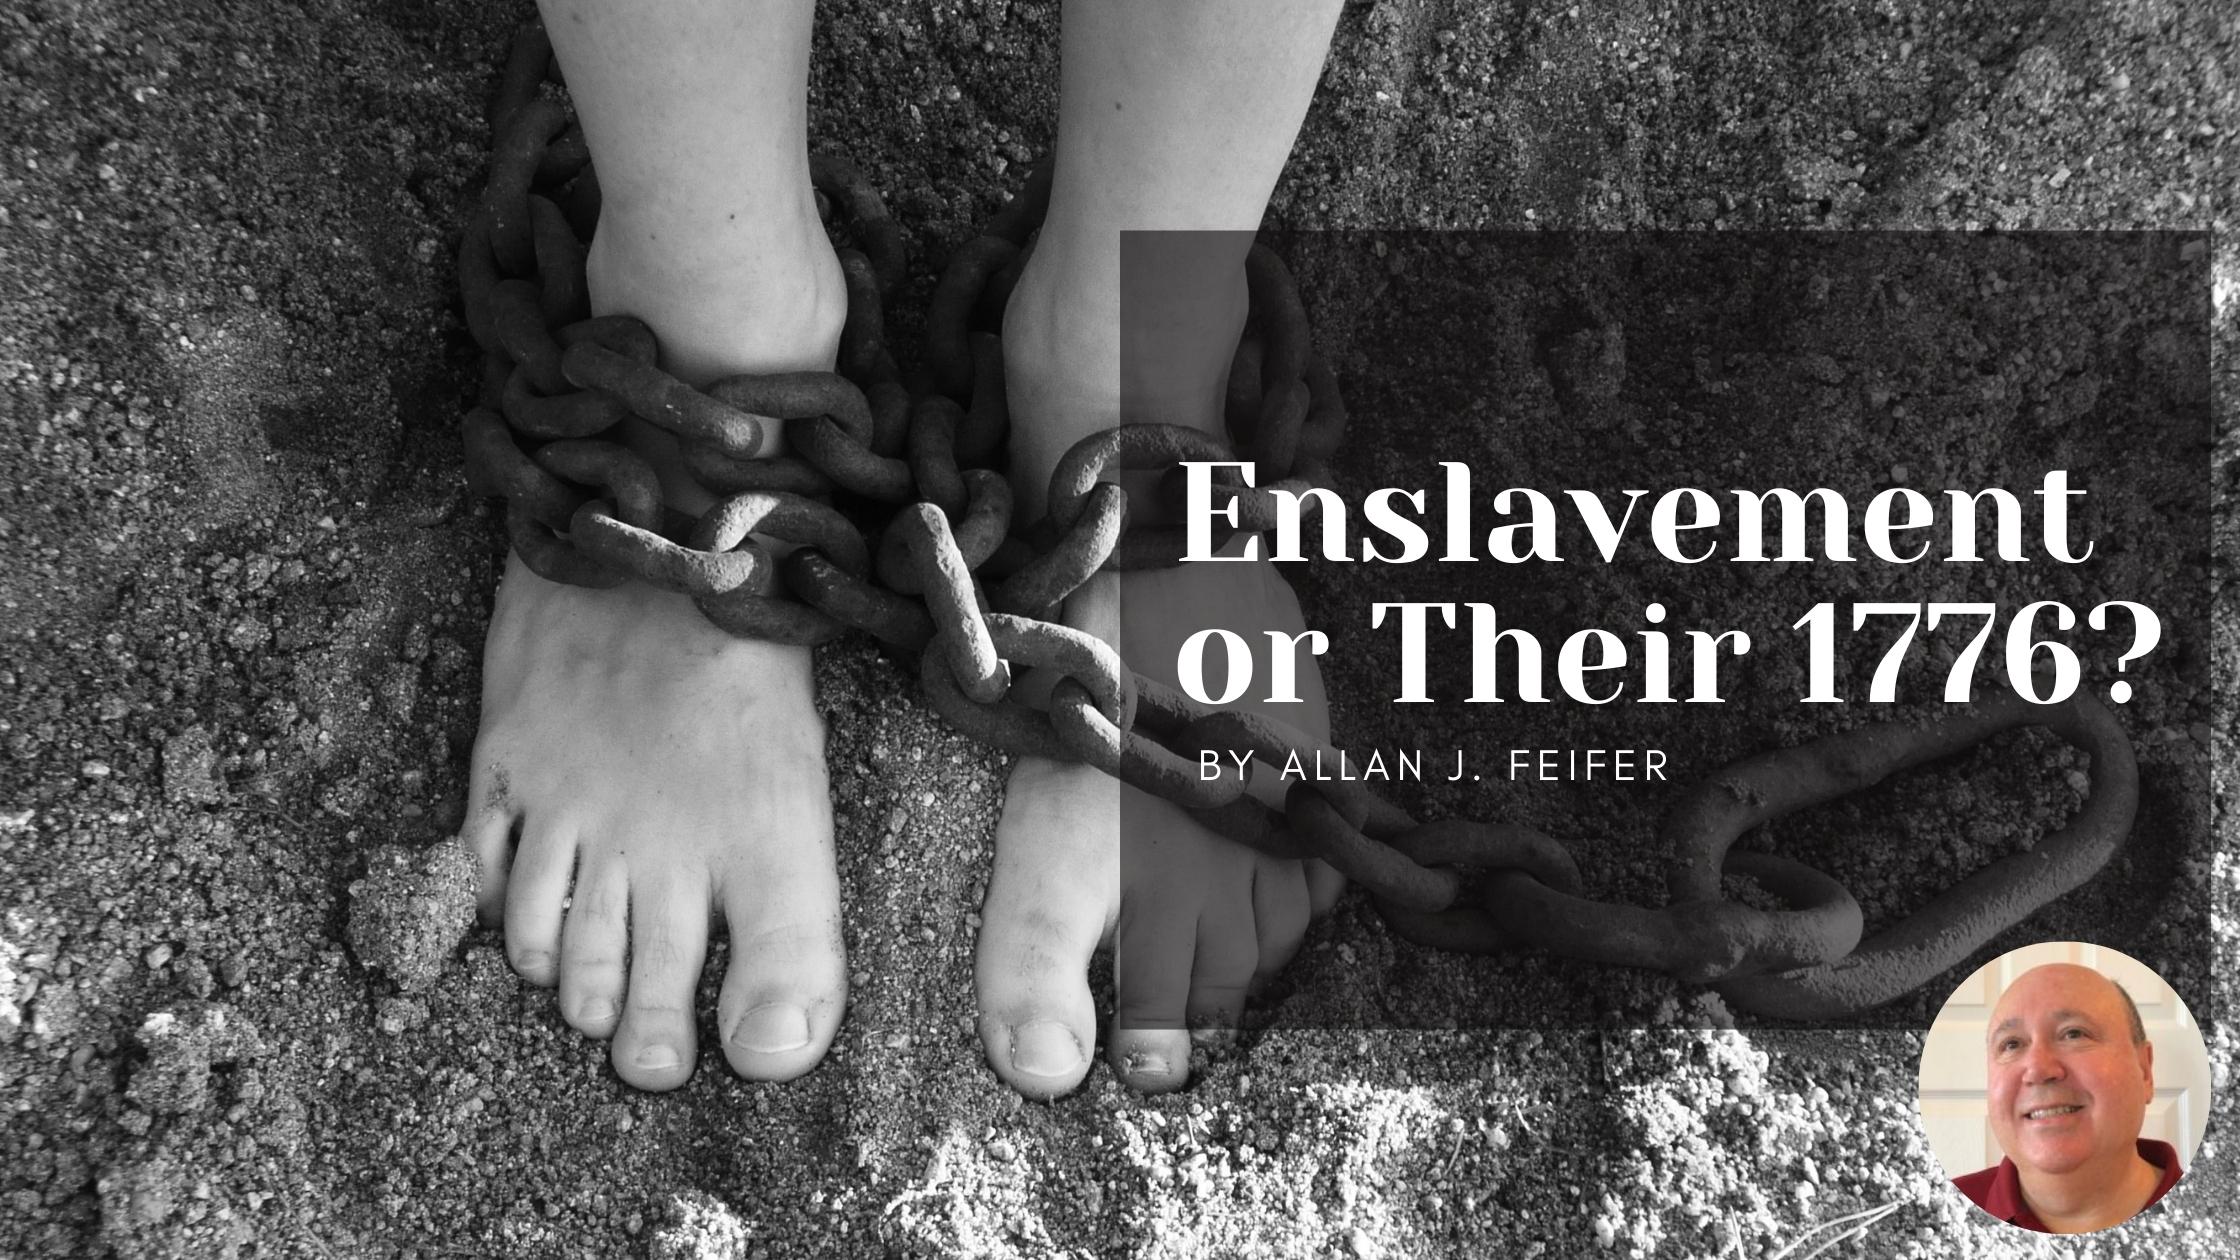 Enslavement or 1776? – 1plu1equals2